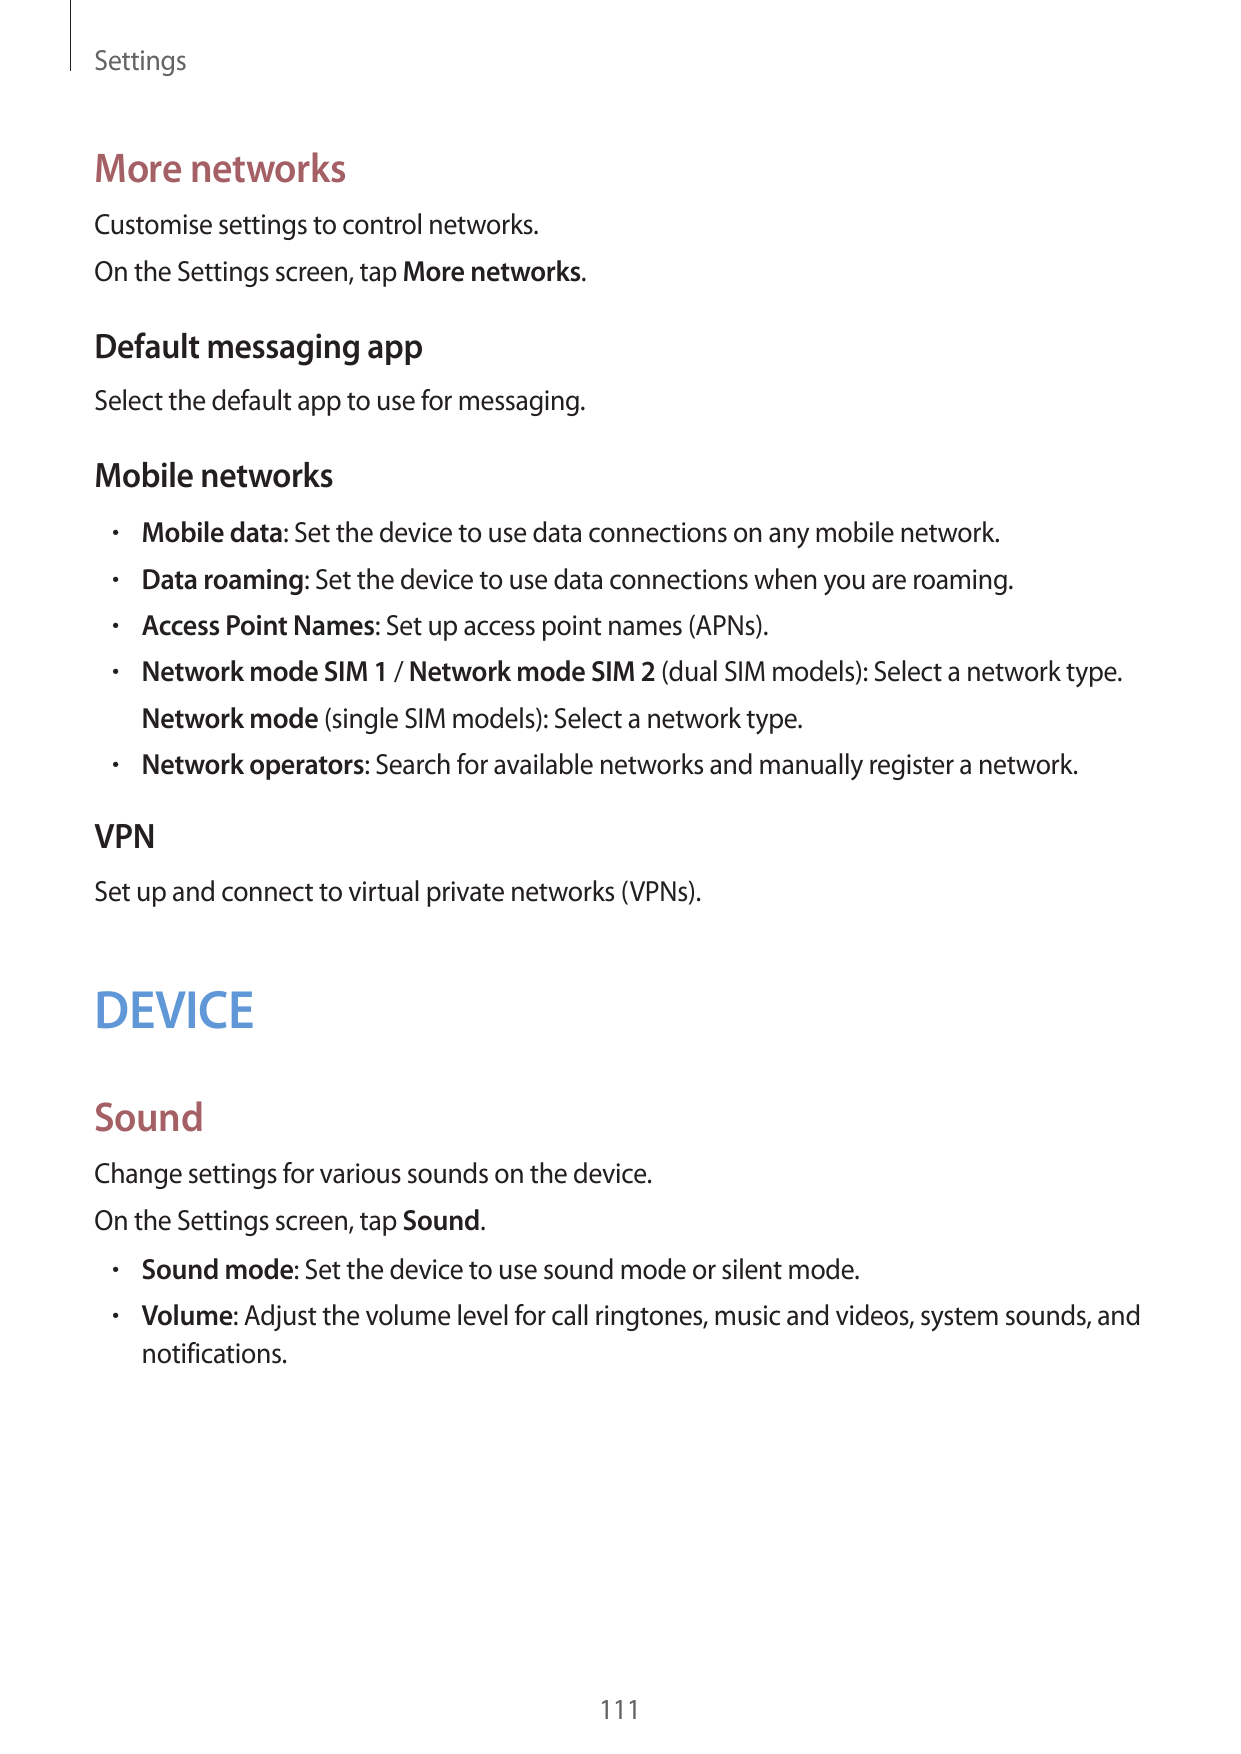 SettingsMore networksCustomise settings to control networks.On the Settings screen, tap More networks.Default messaging appSelec